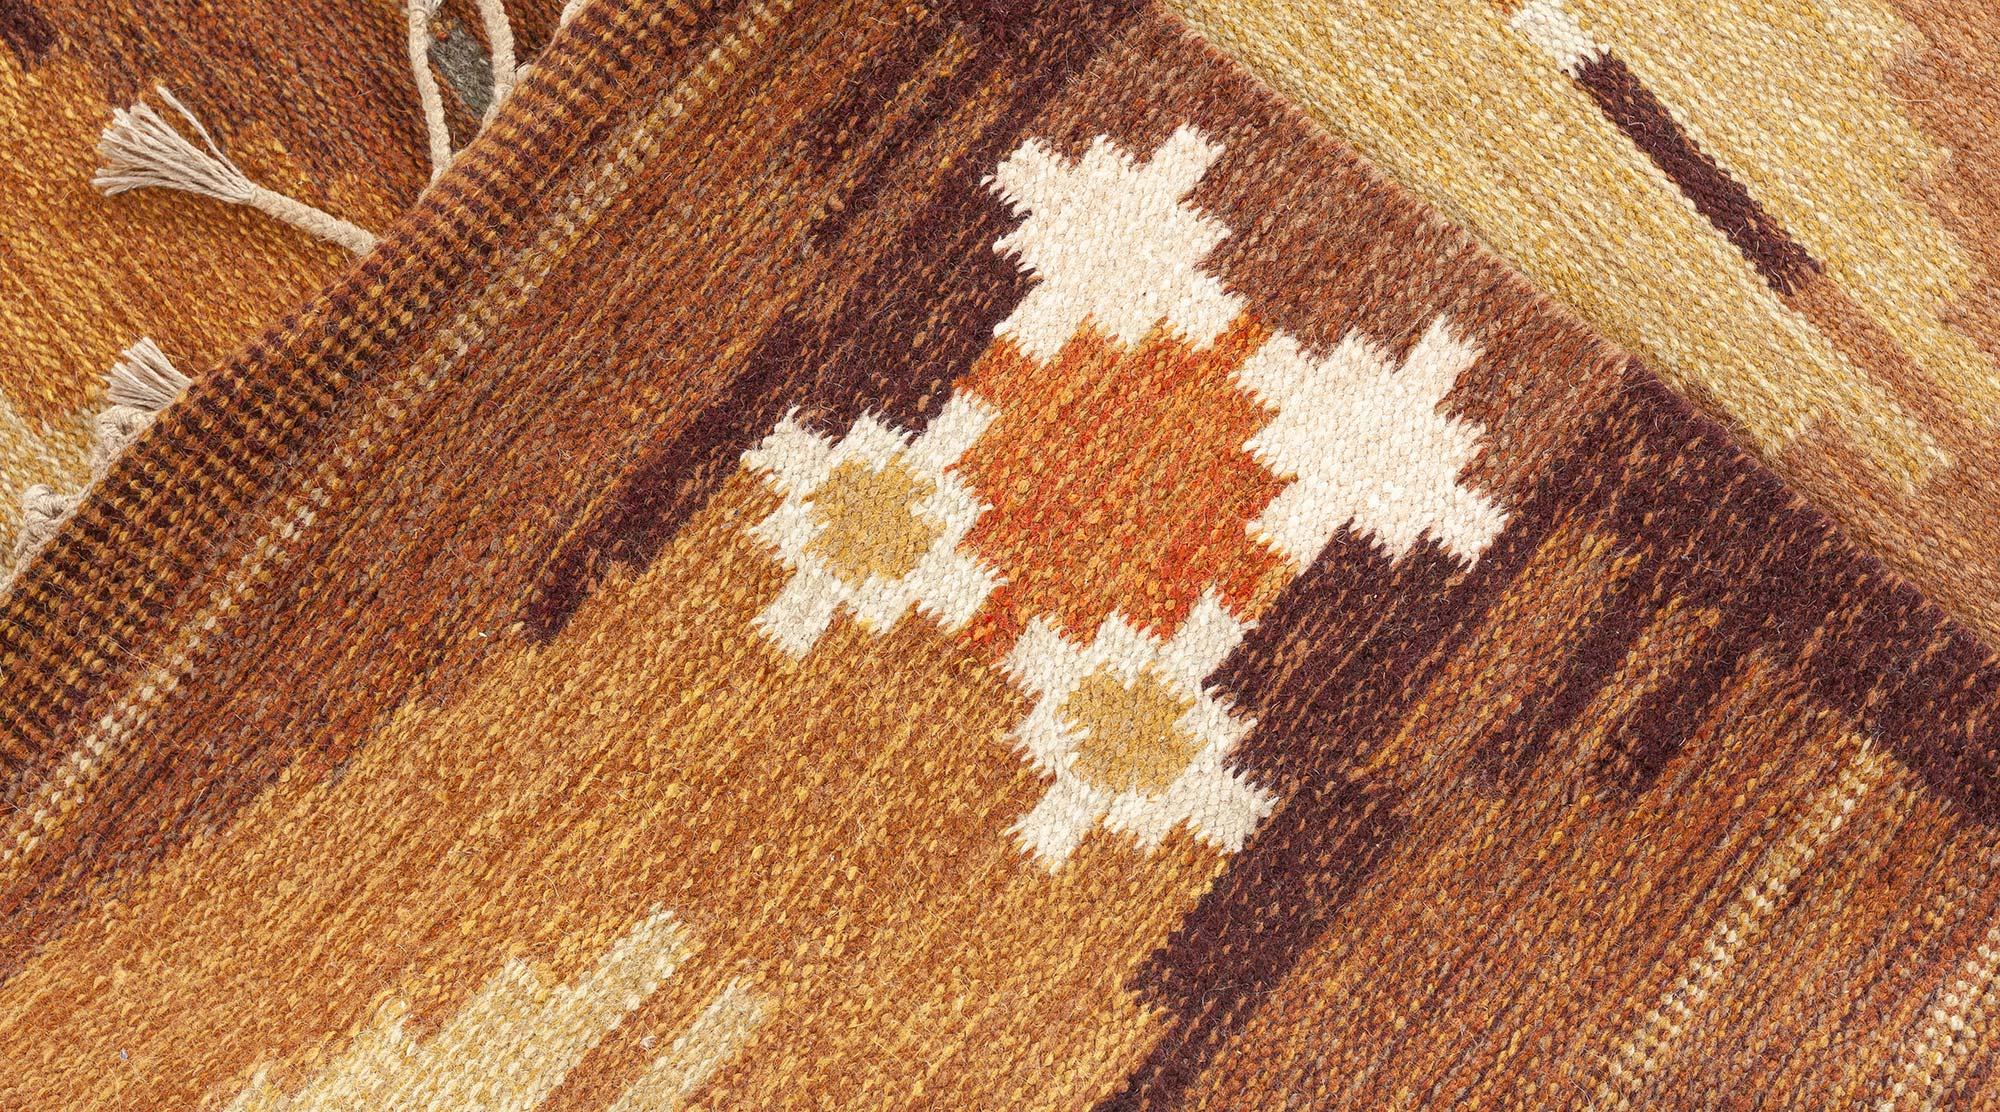 Vintage Swedish rug by Ingegerd Silow
Size: 4'7